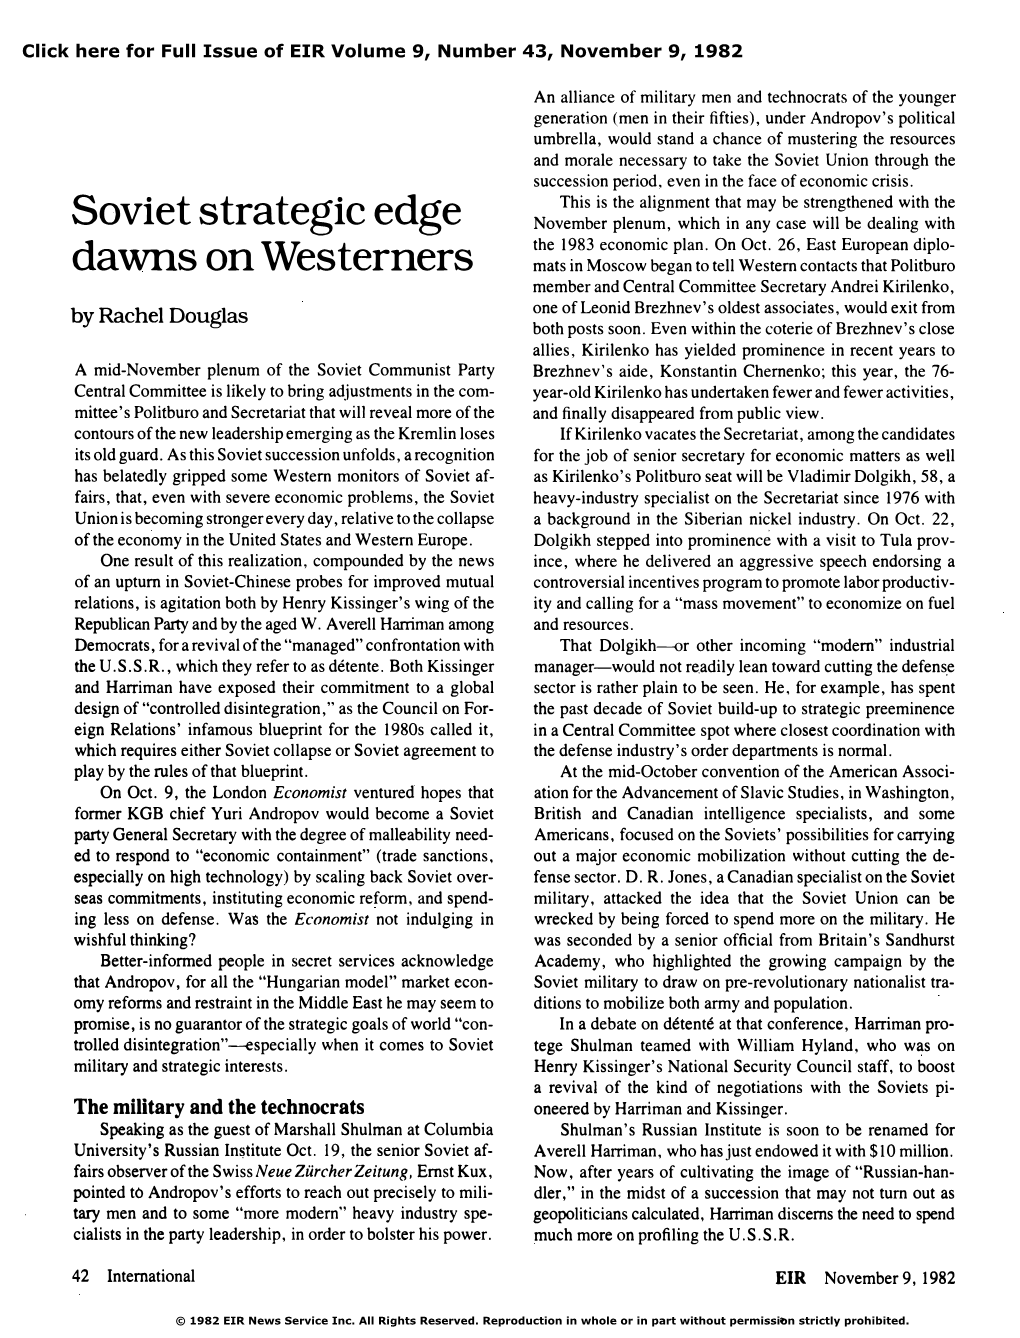 Soviet Strategic Edge Dawns on Westerners